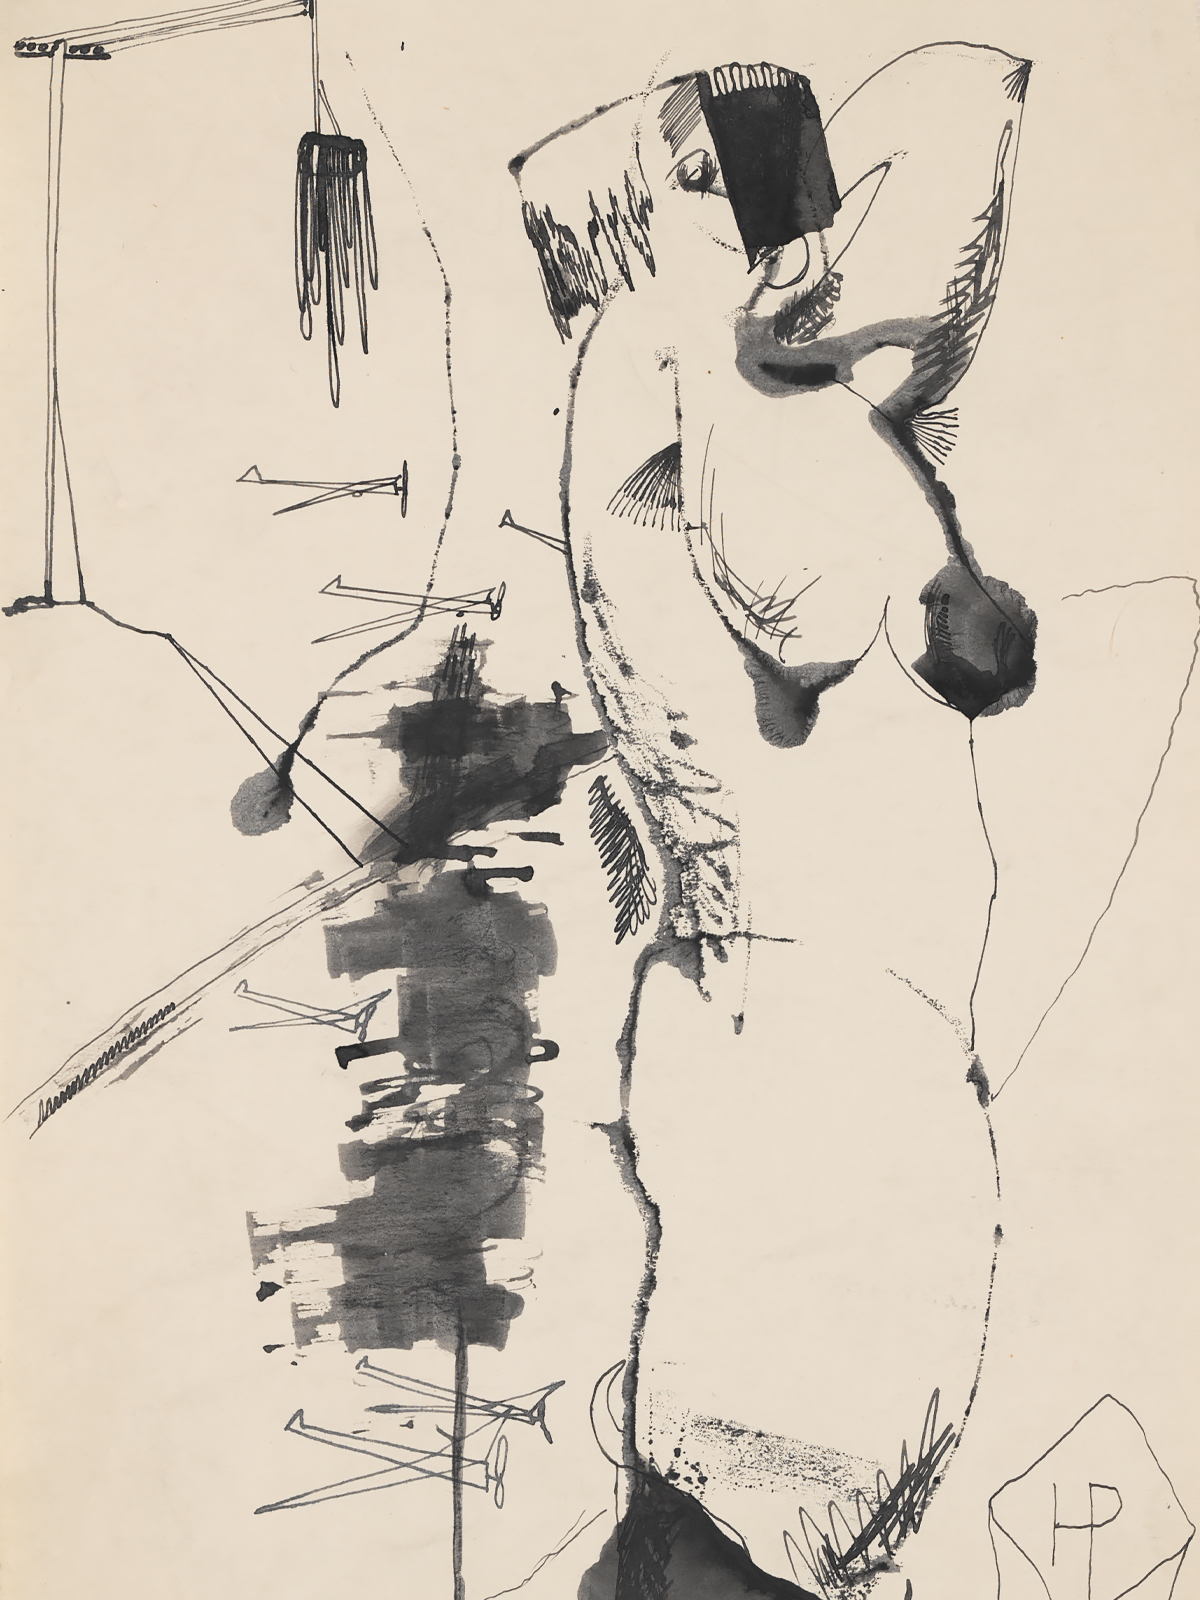 Cap (Miroslav Šimorda) - Three woman nudes